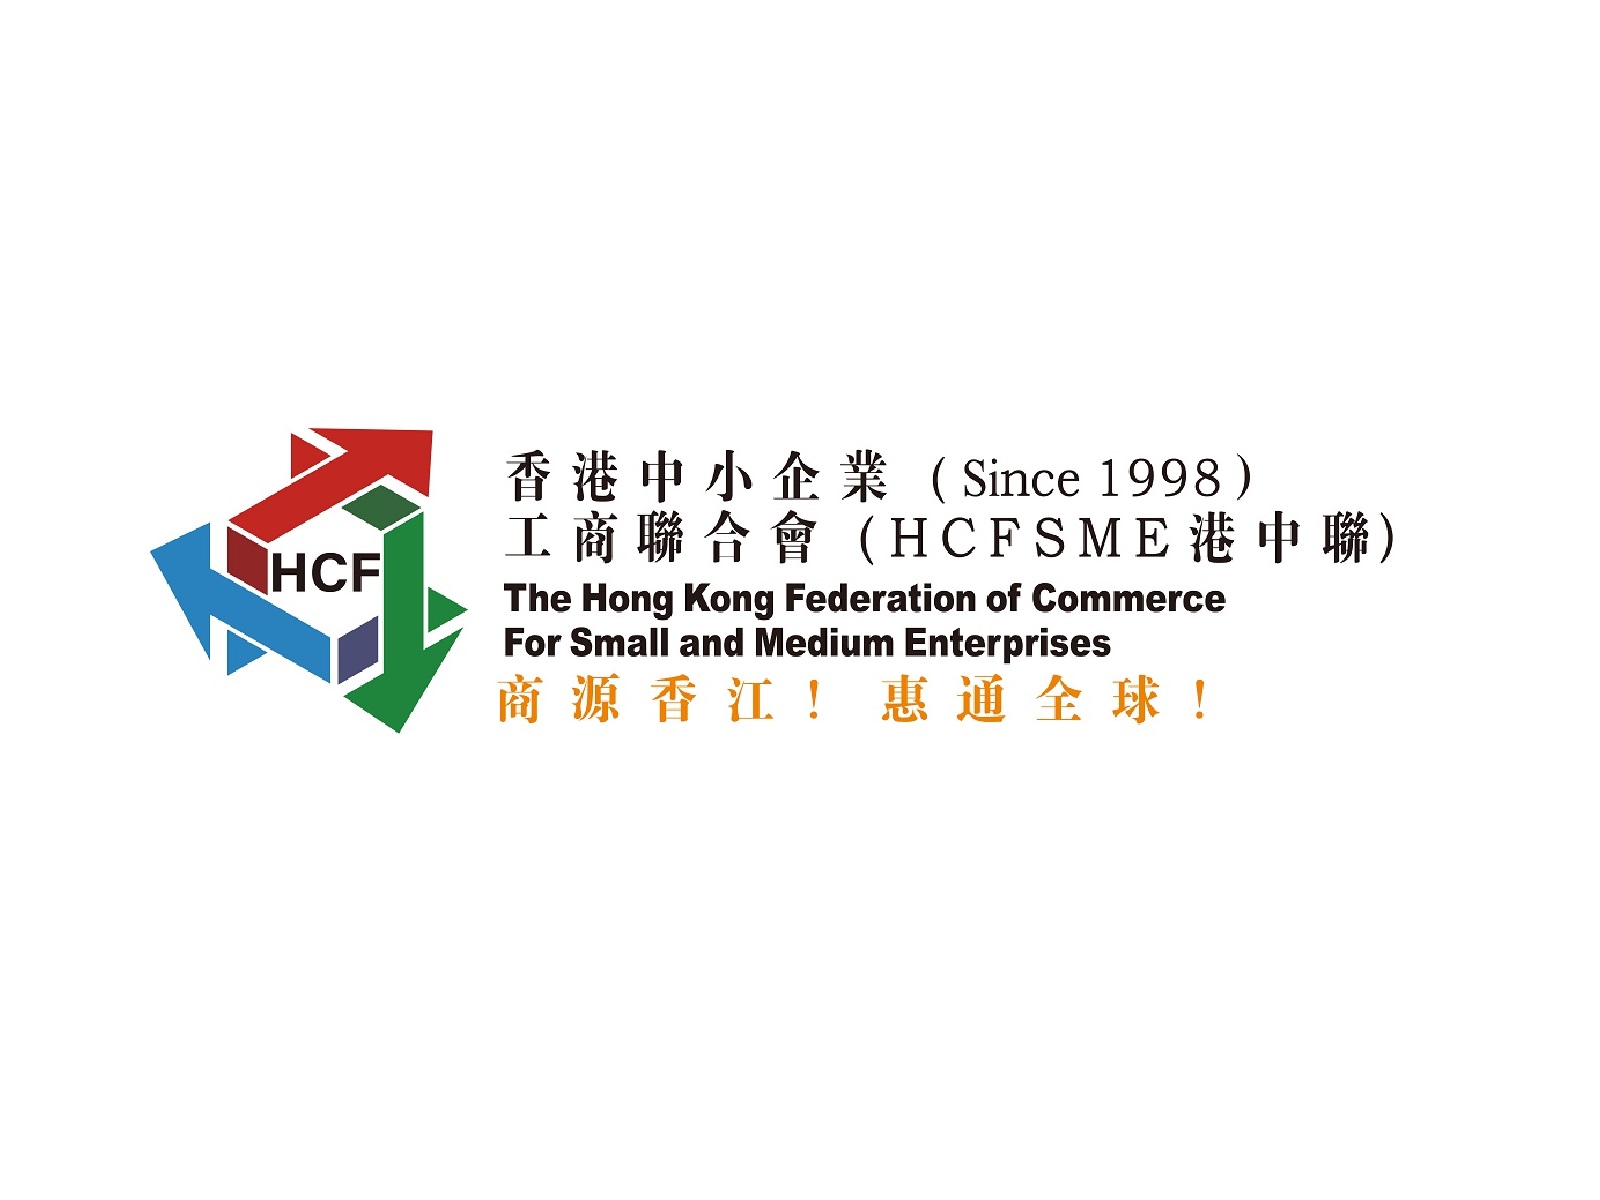 The Hong Kong Federation of Commerce For Small and Medium Enterprises (HCFSME)